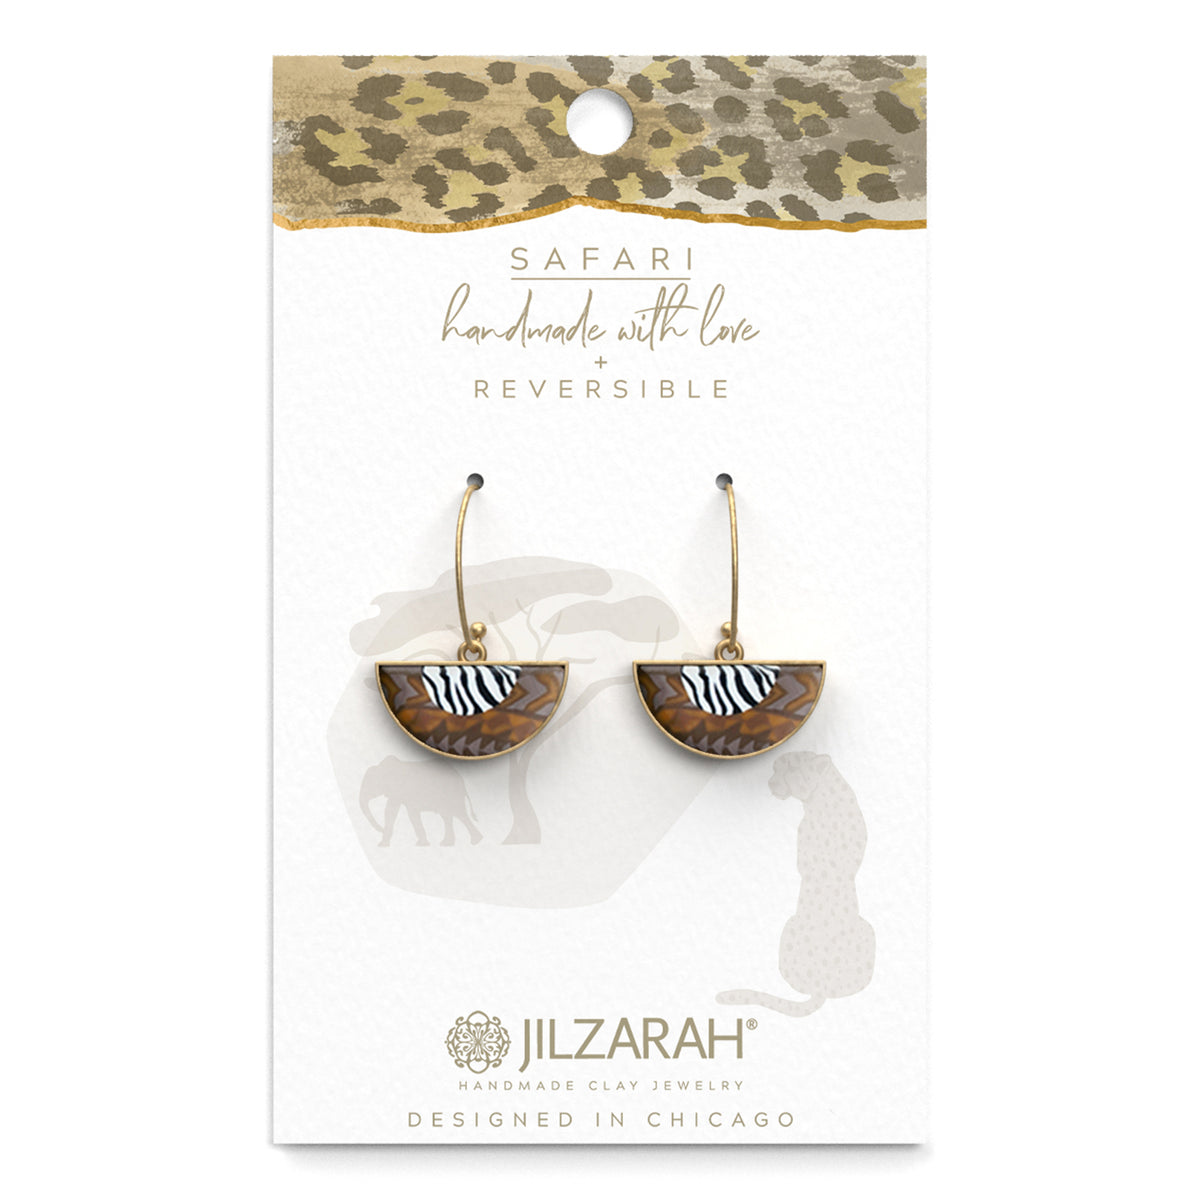 Safari Reversible Half Shell Earrings